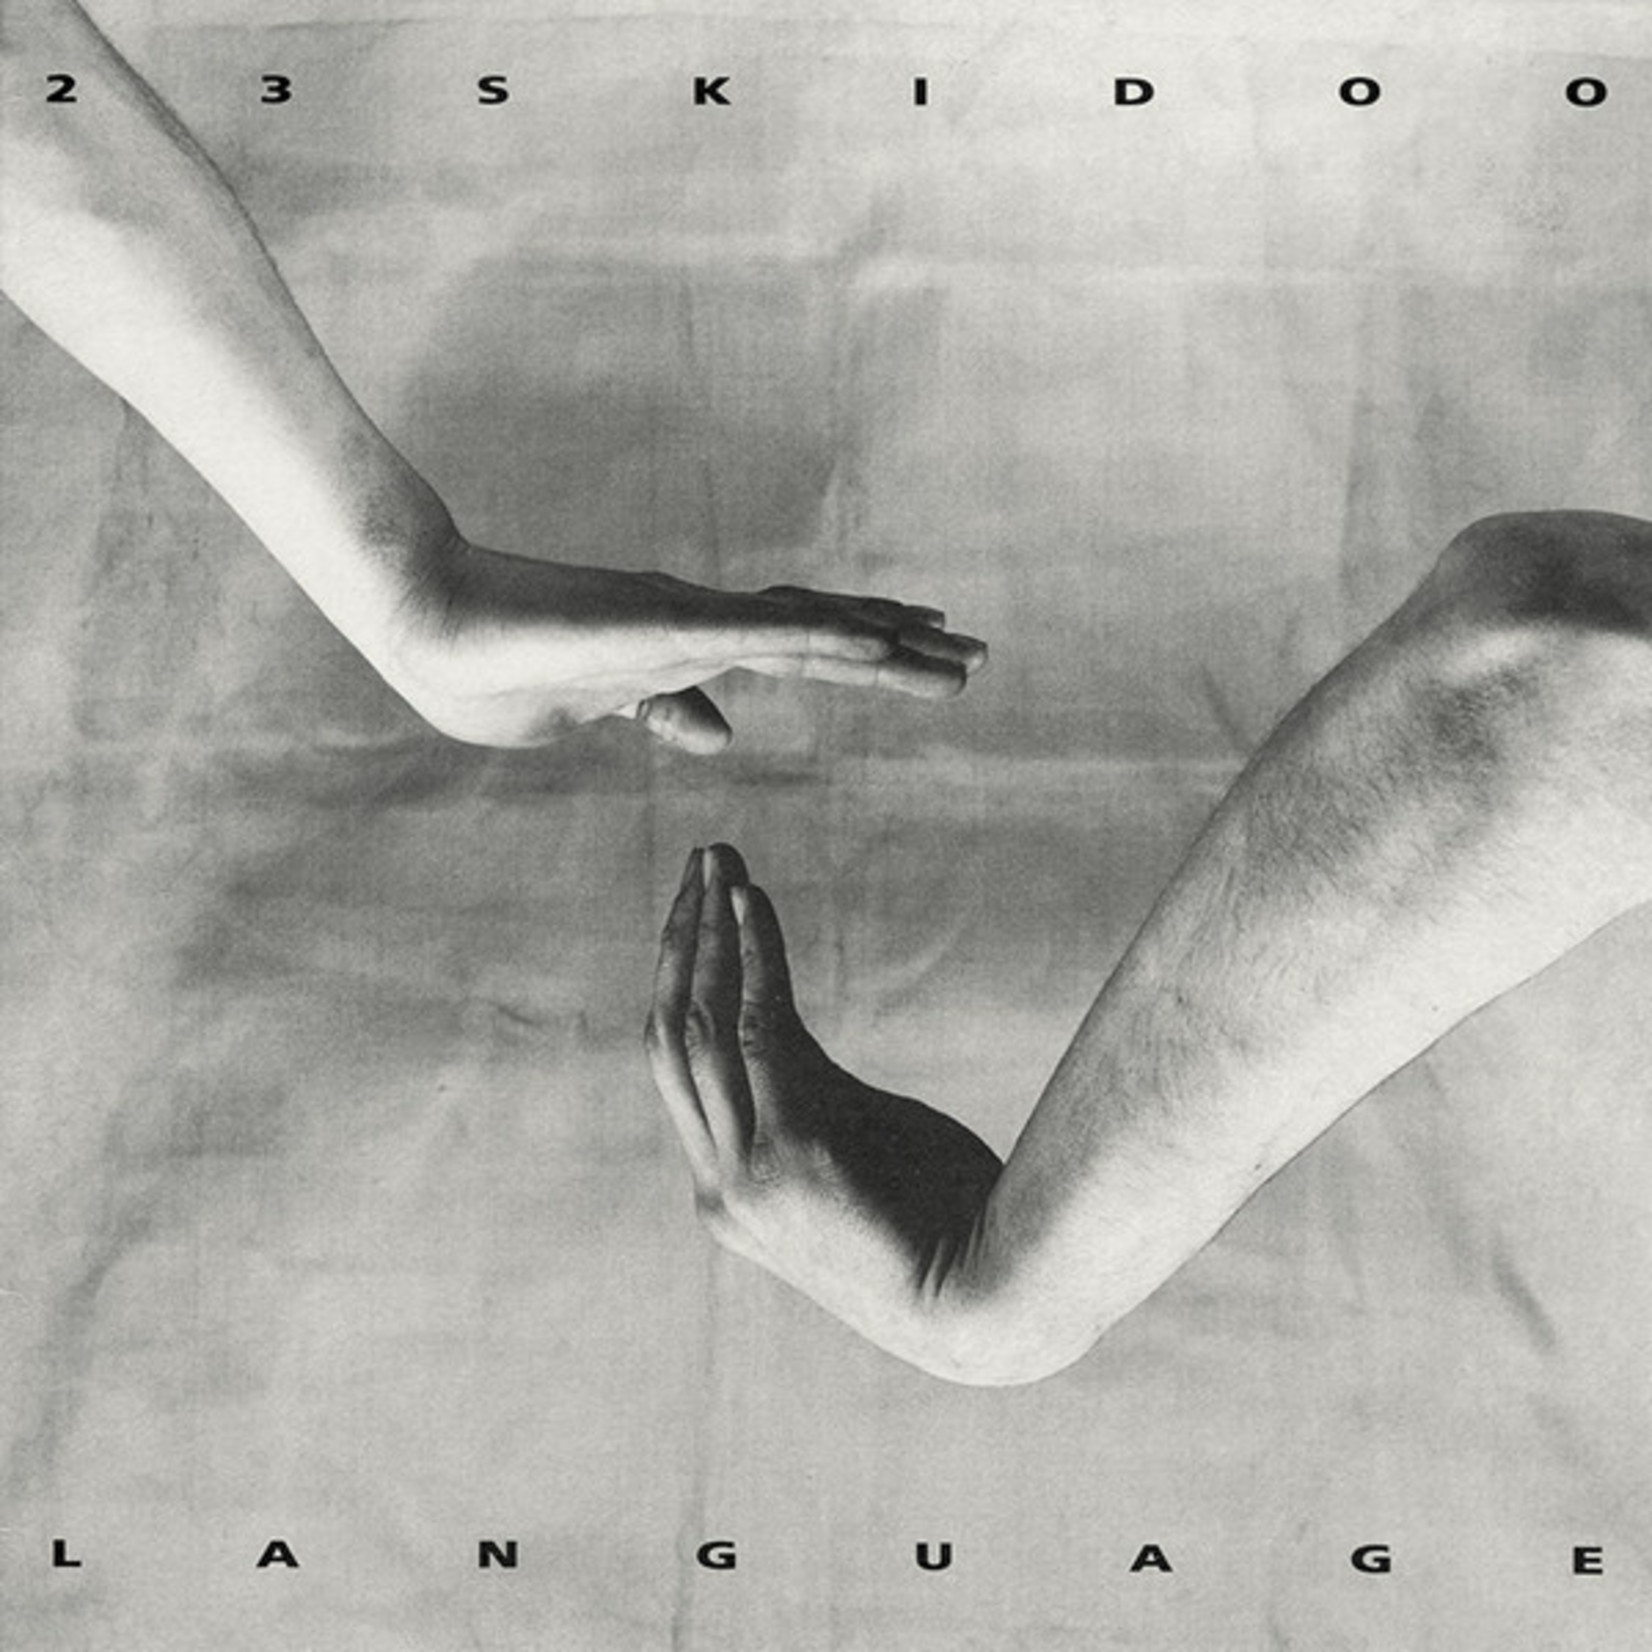 23 SKIDOO – LANGUAGE - LP